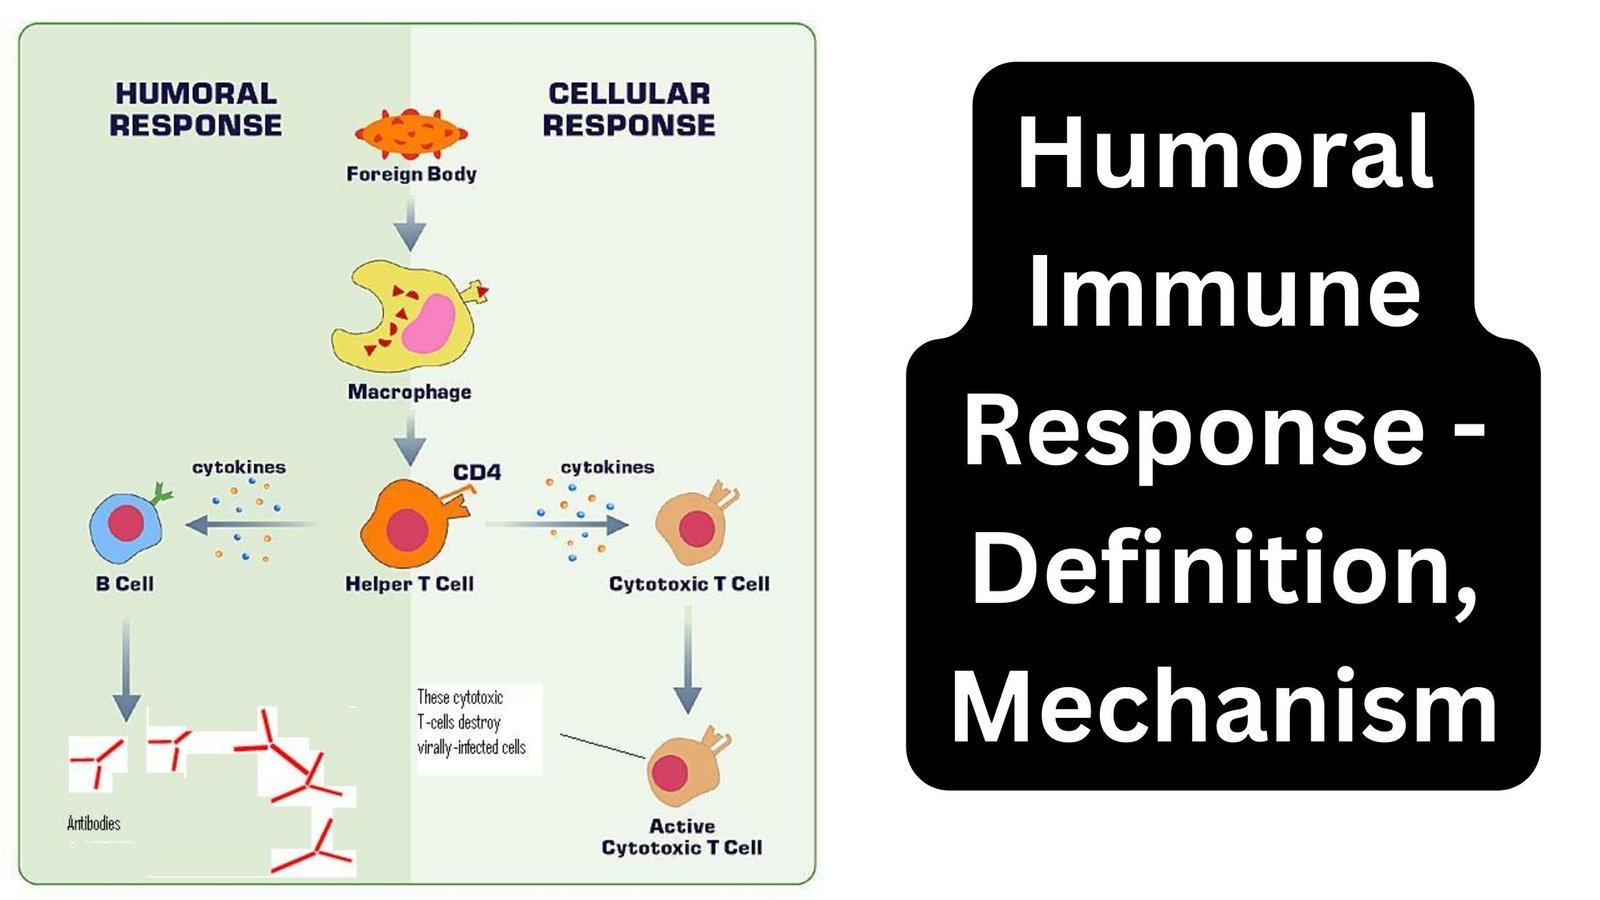 Humoral Immunity – Definition, Mechanism